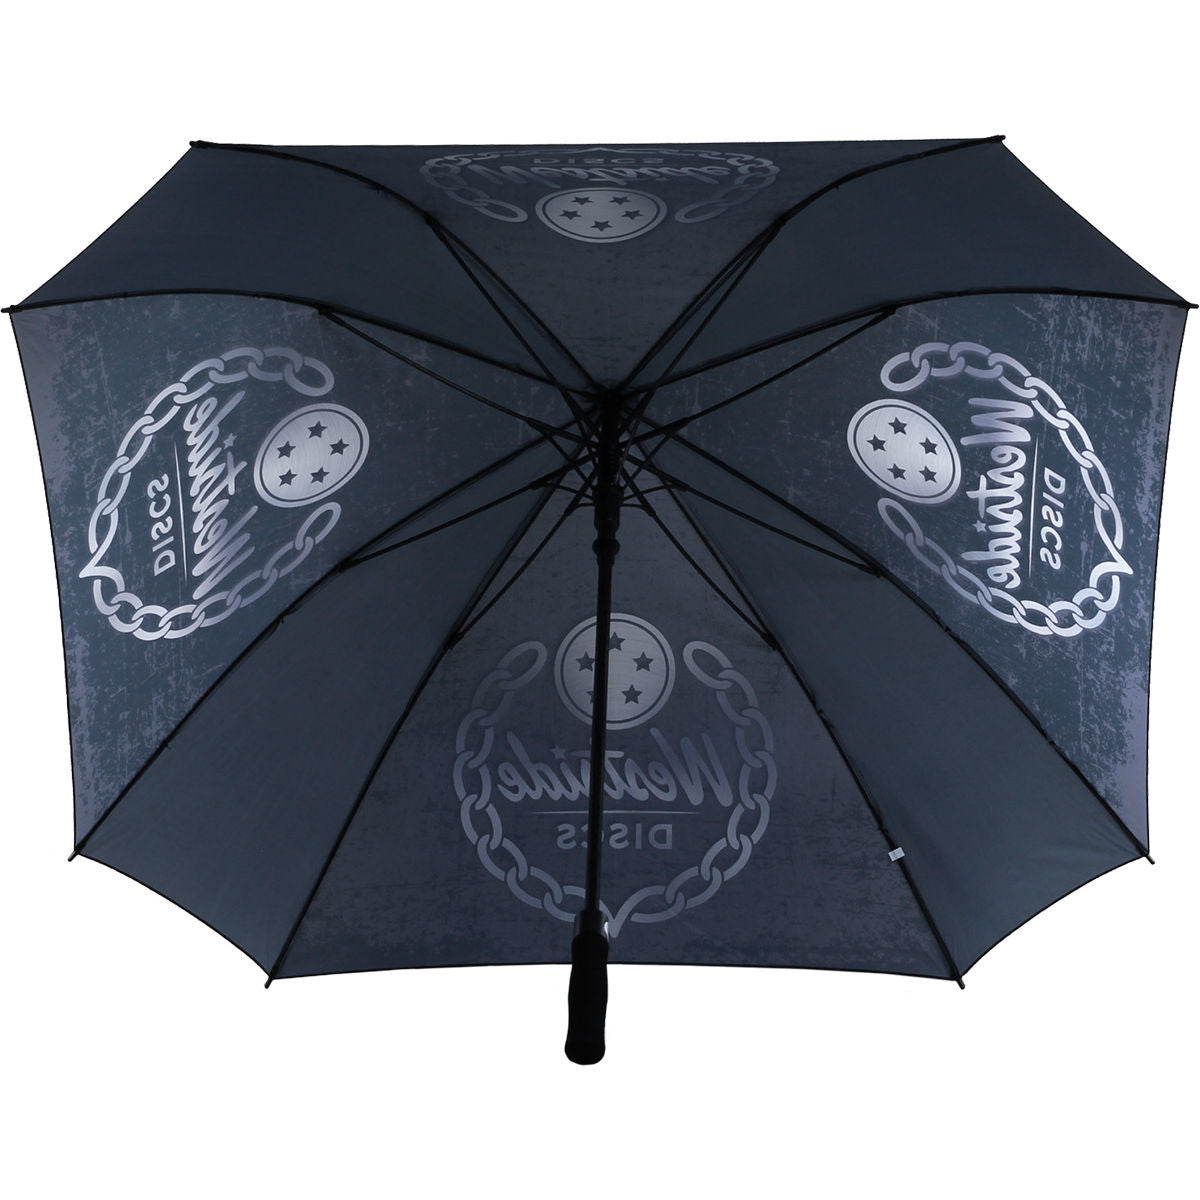 Westside Discs 60" Arc Umbrella